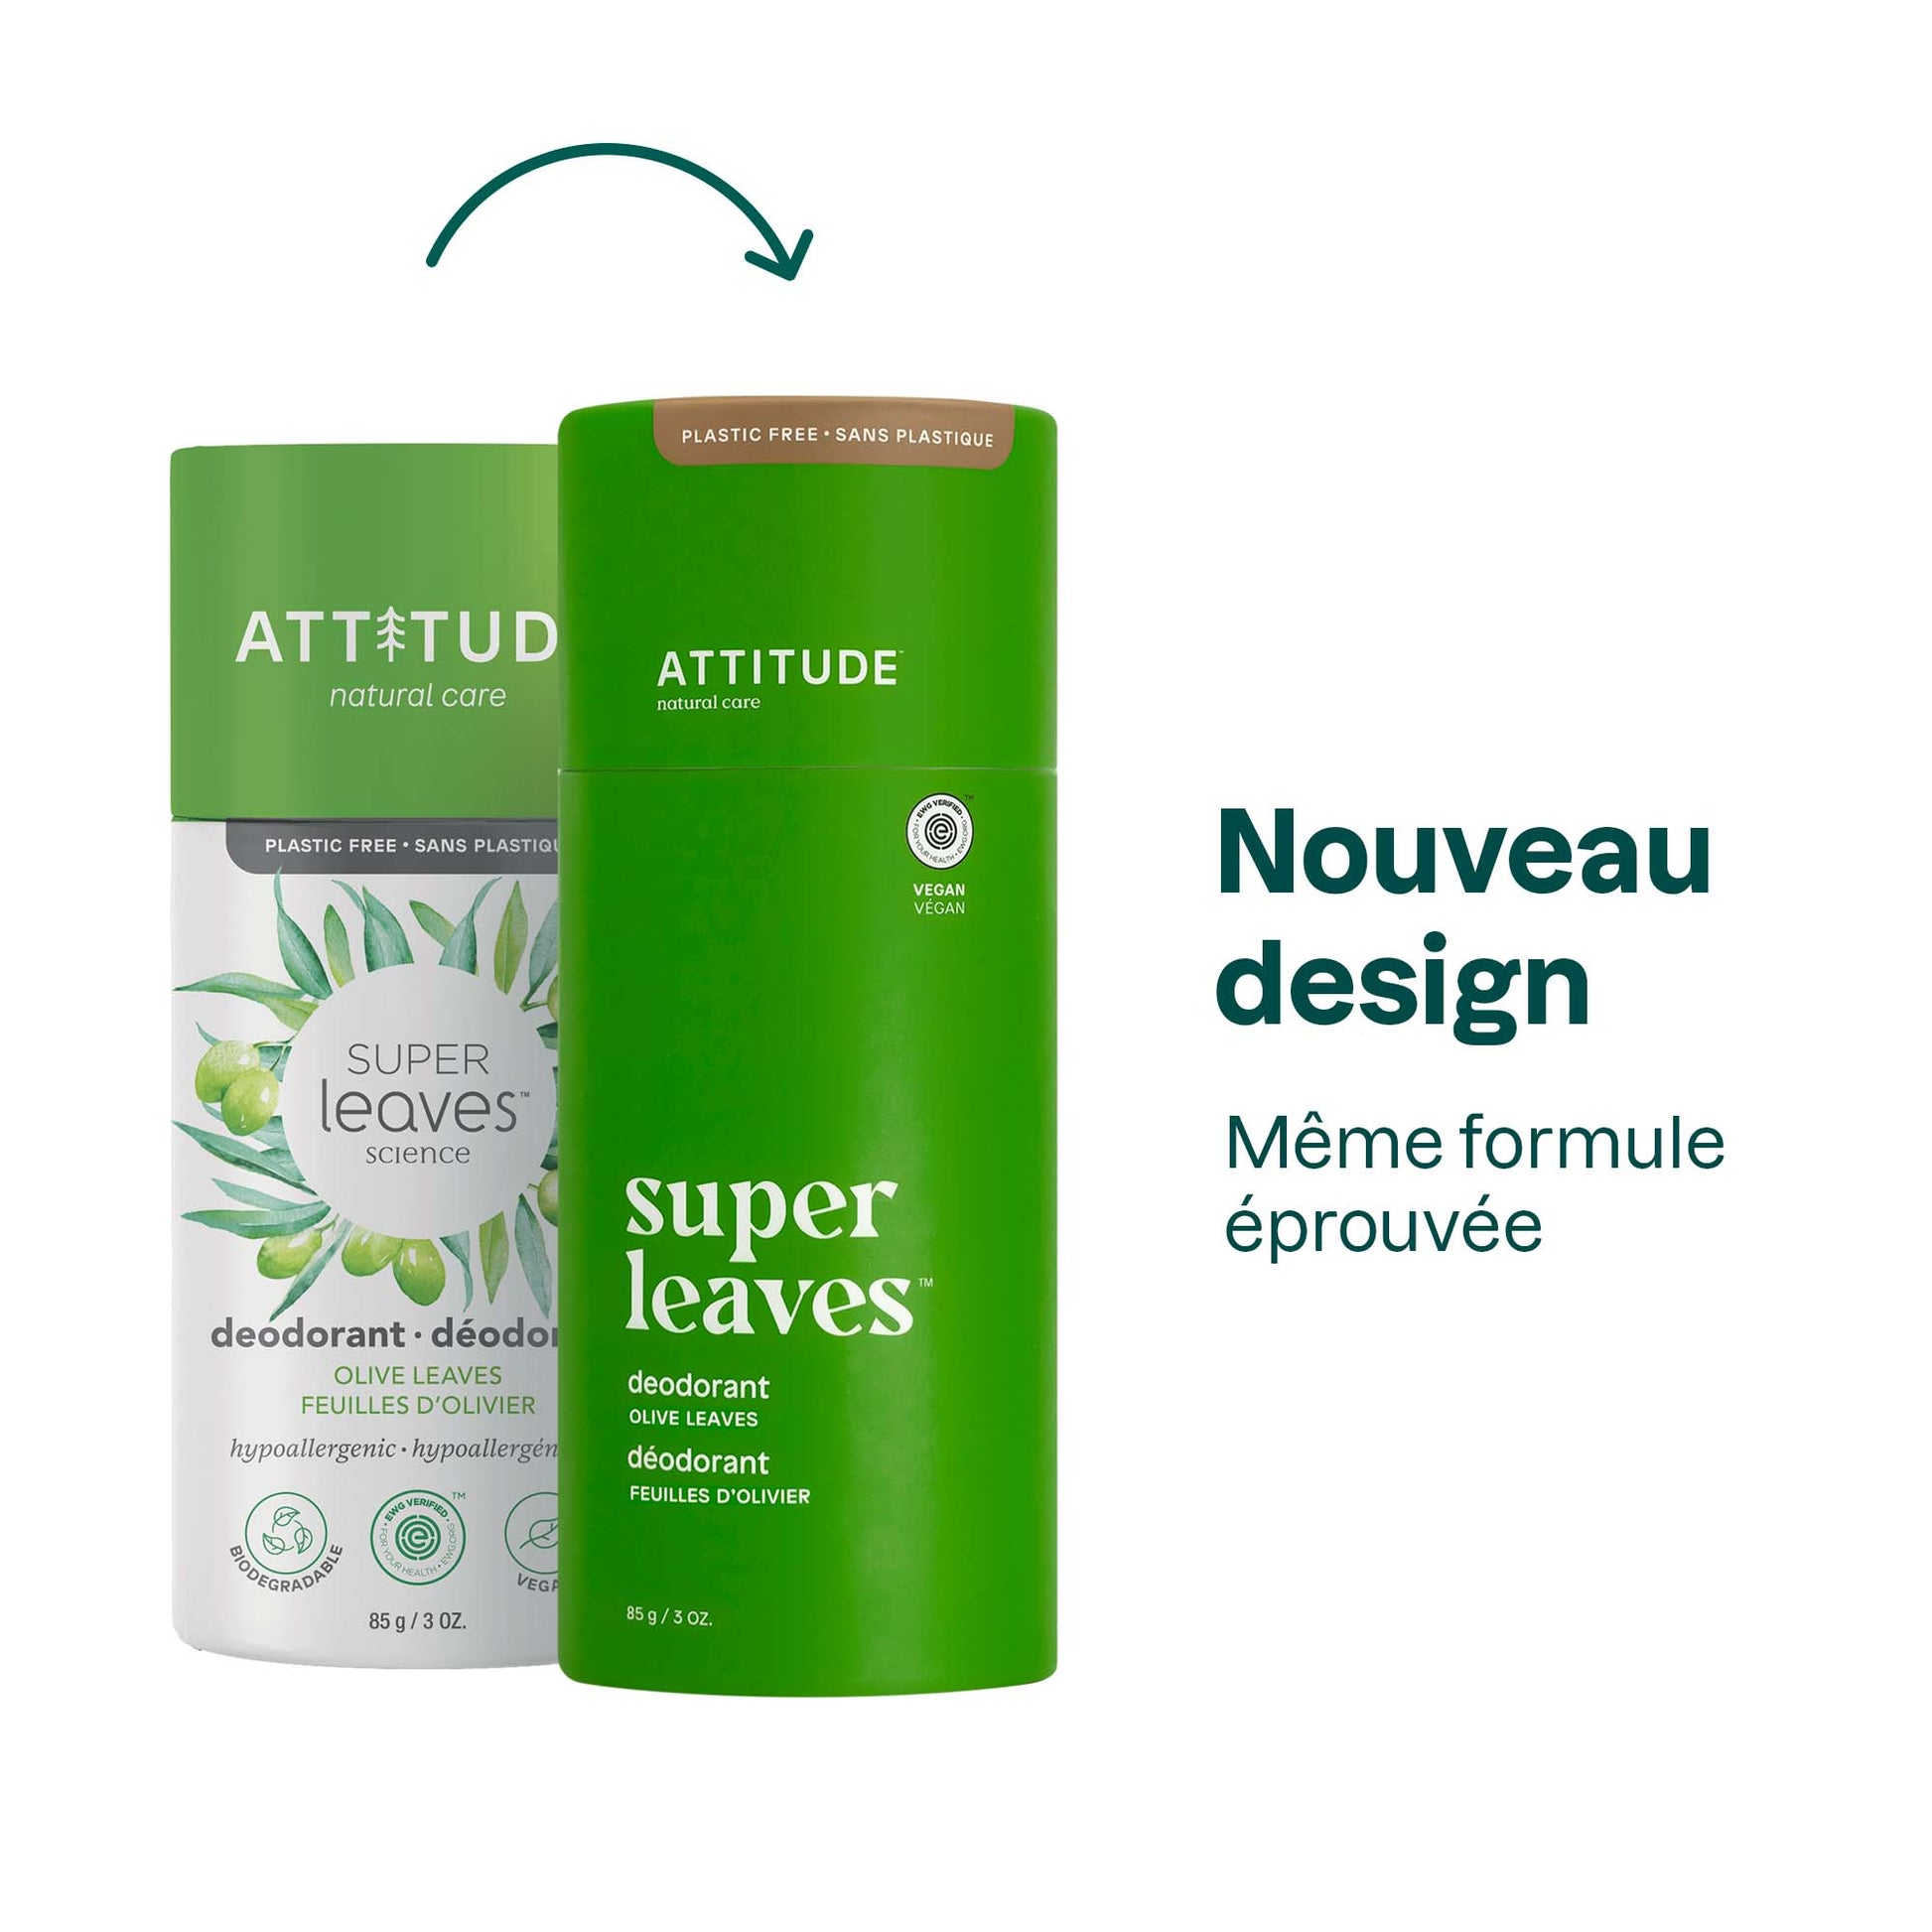 ATTITUDE Super leaves Biodegredable Deodorant Olive Leaves 11993_en? Olive Leaves 1 unit